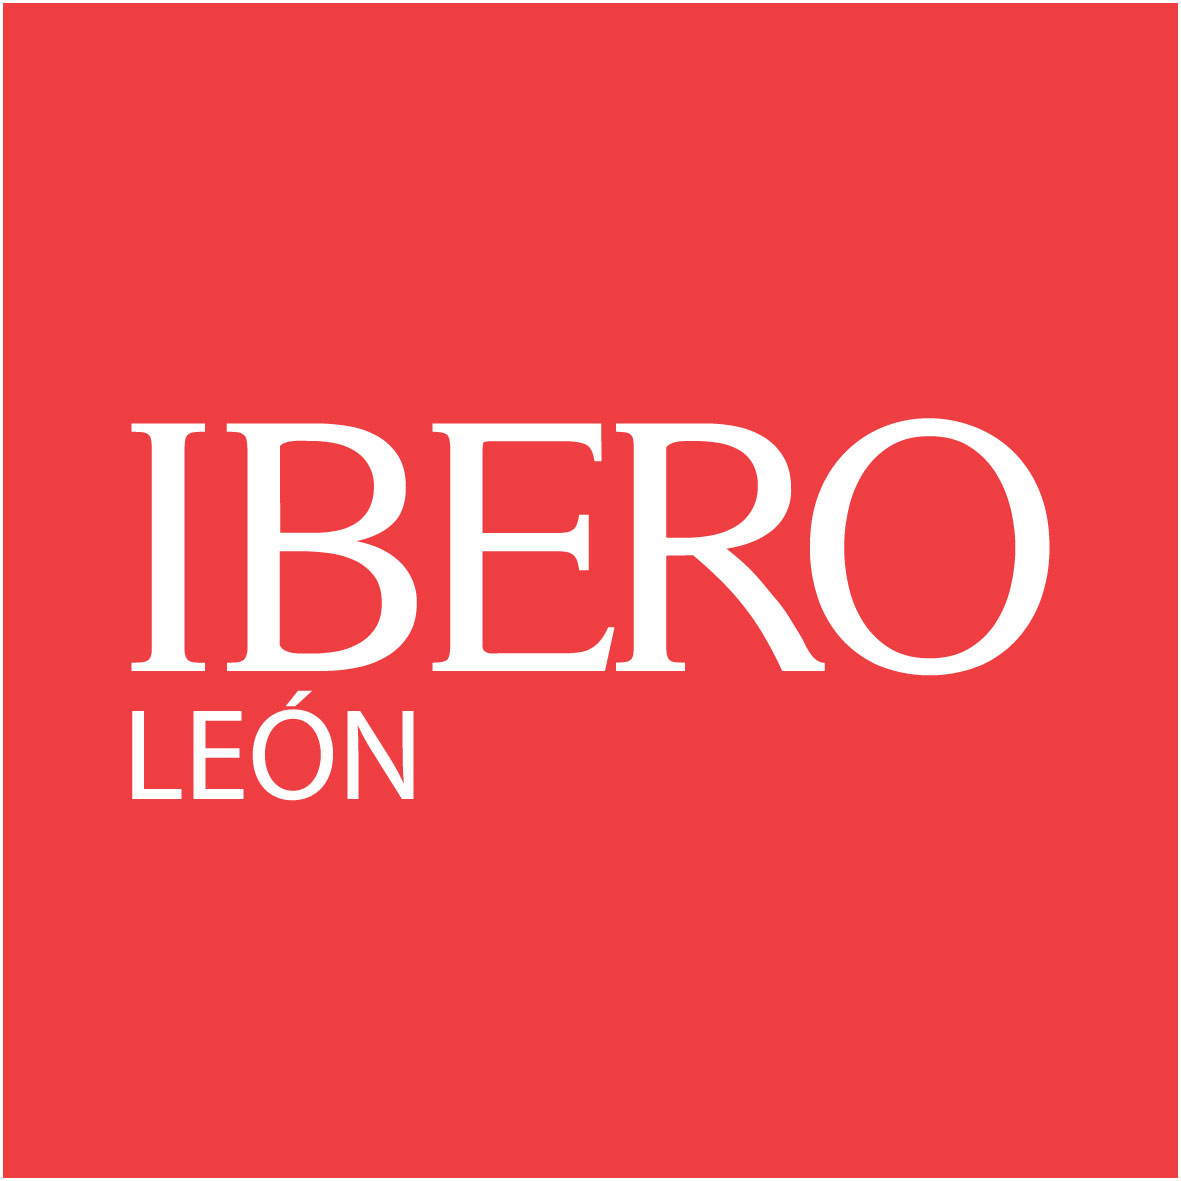 logo-ibero